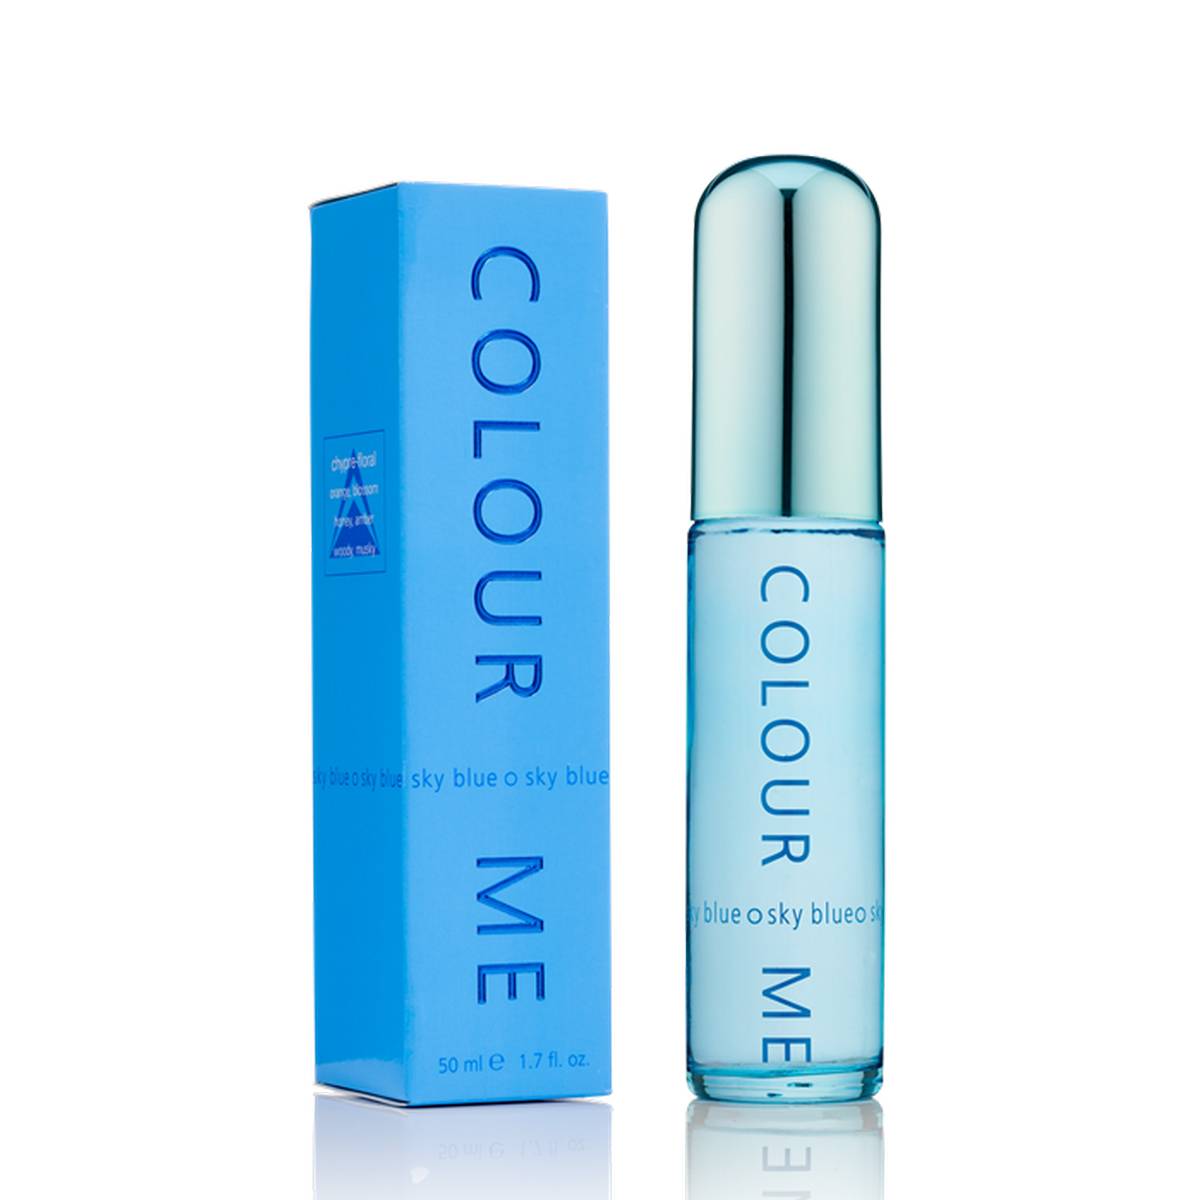 Colour Me Sky Blue Perfume For Women - 50ml